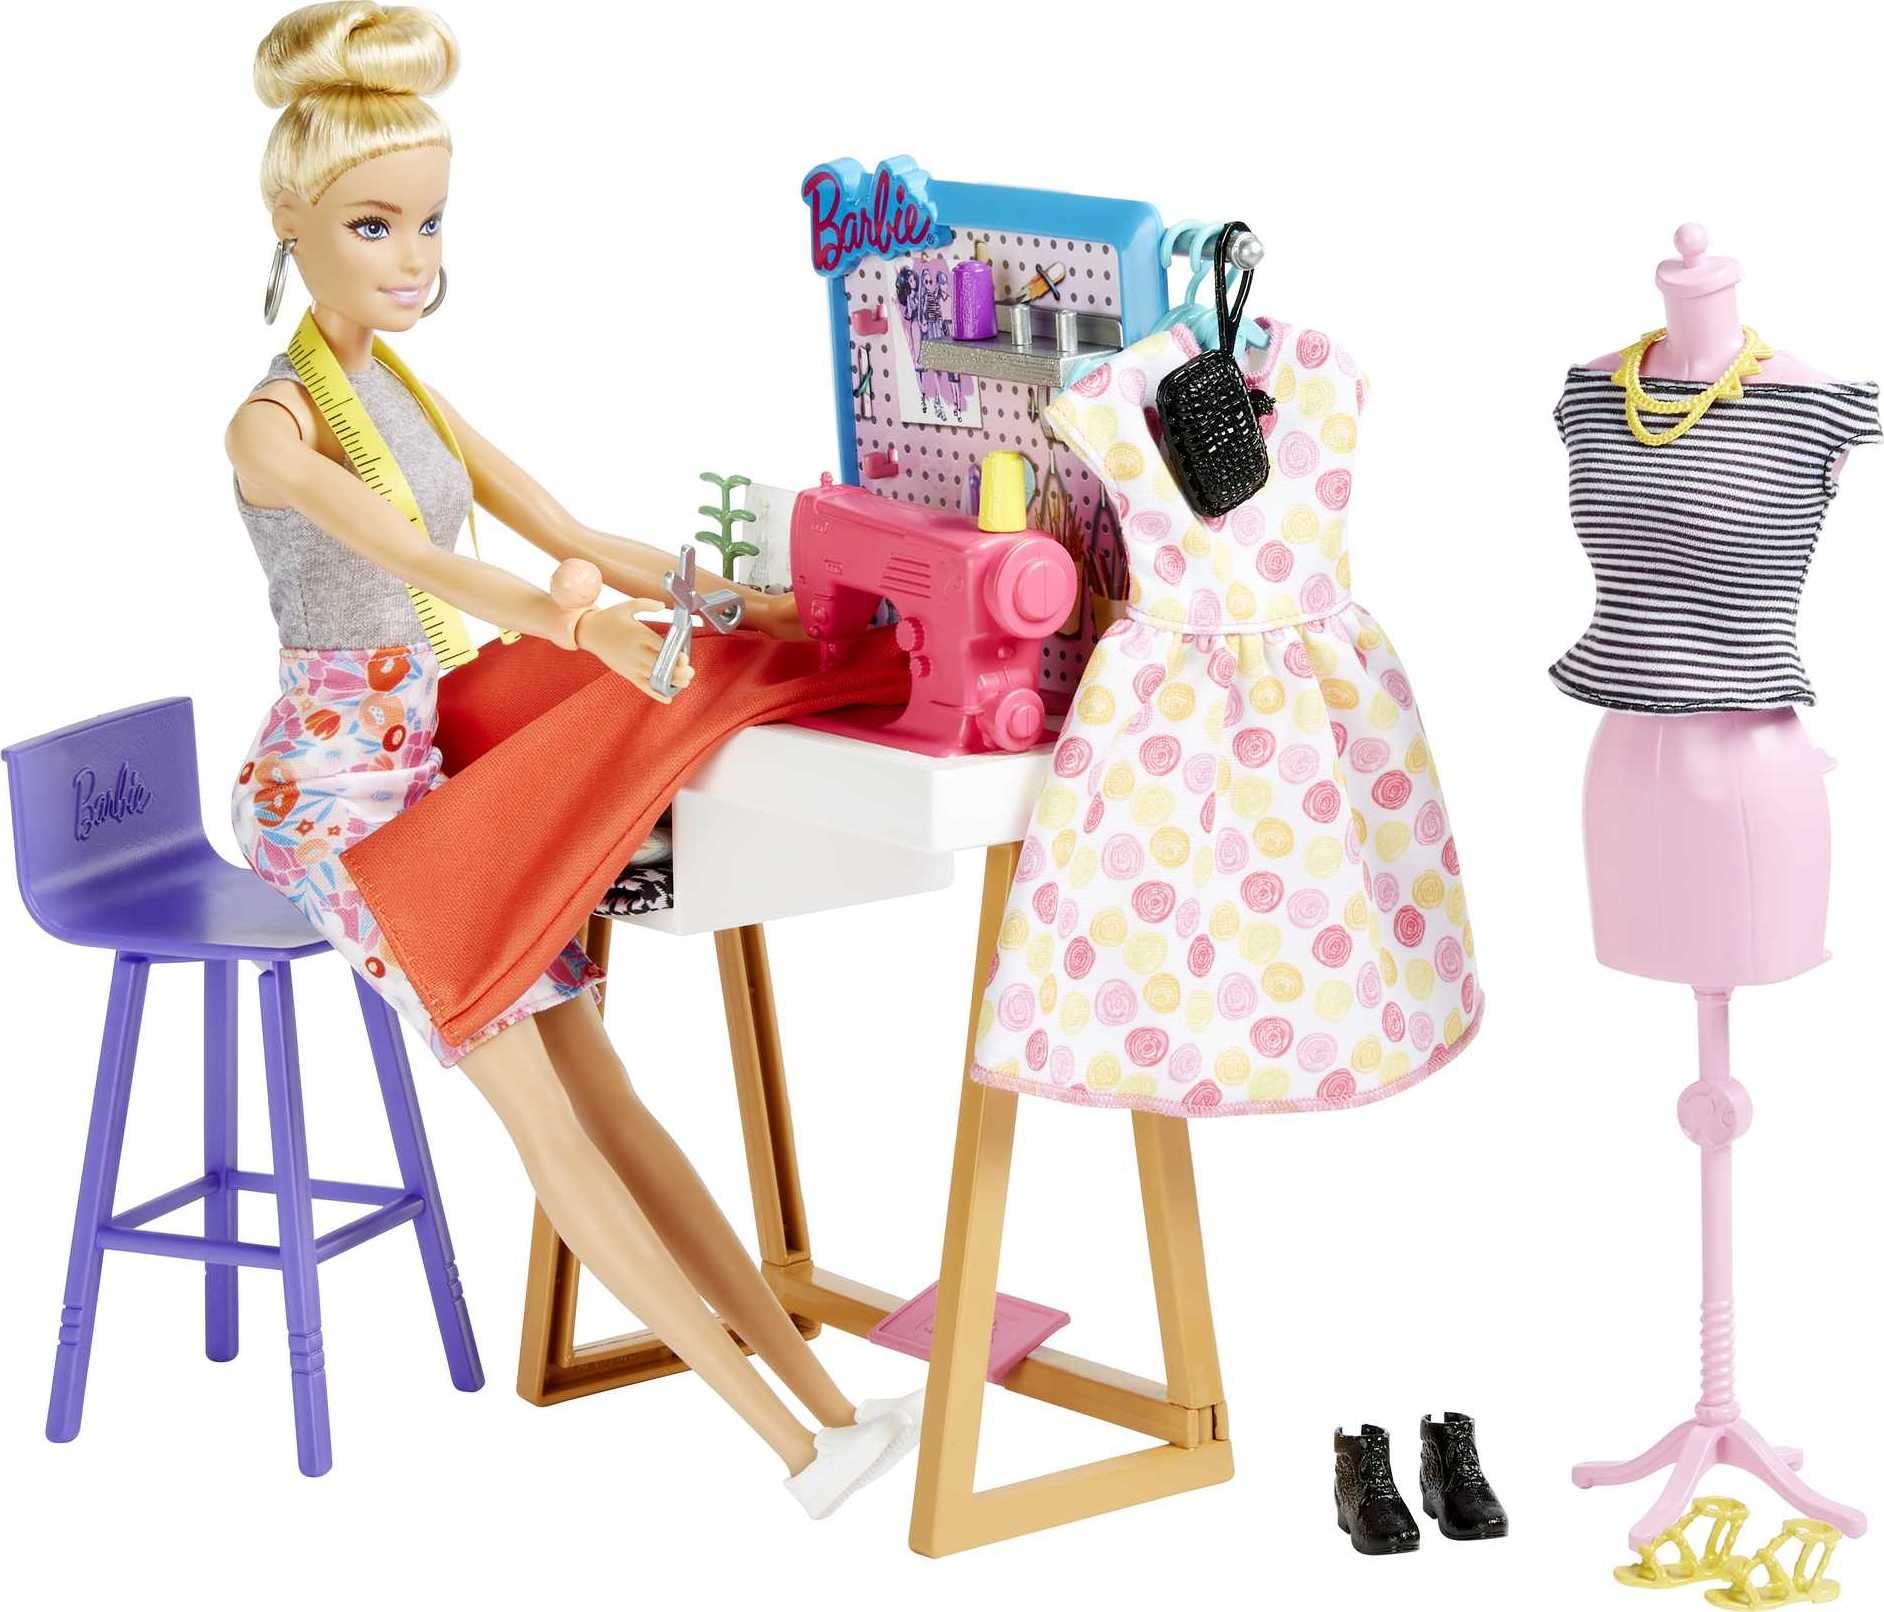 25-Piece Barbie Fashion Designer Doll w/ Design Studio Furniture, Accessories & Mannequin $9.99 + Free Shipping w/ Prime or on $25+